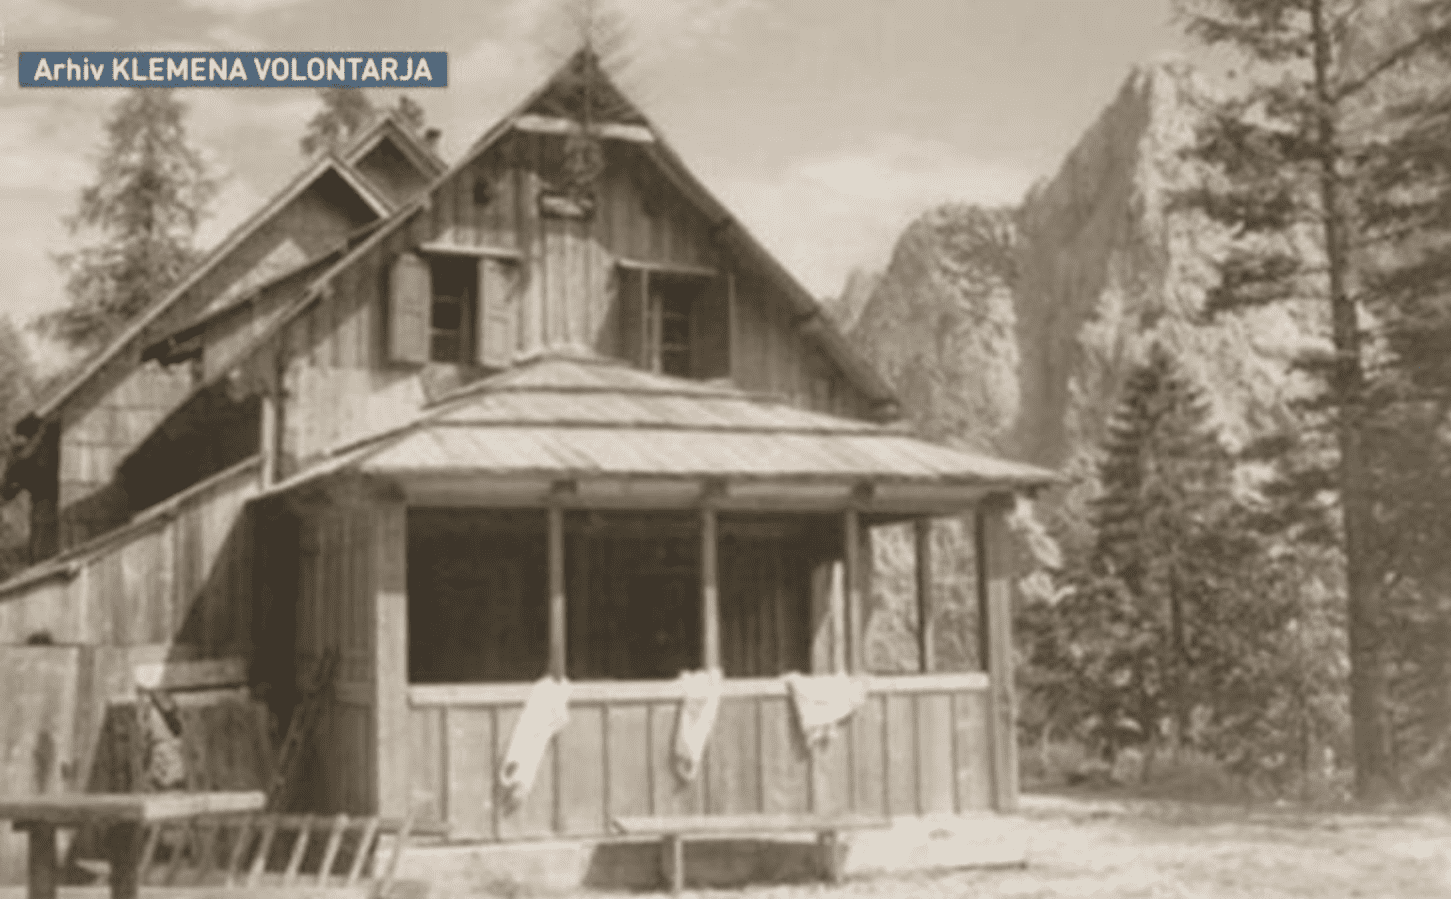 One hundred years of Erjavčeva's hut on Vršič pass